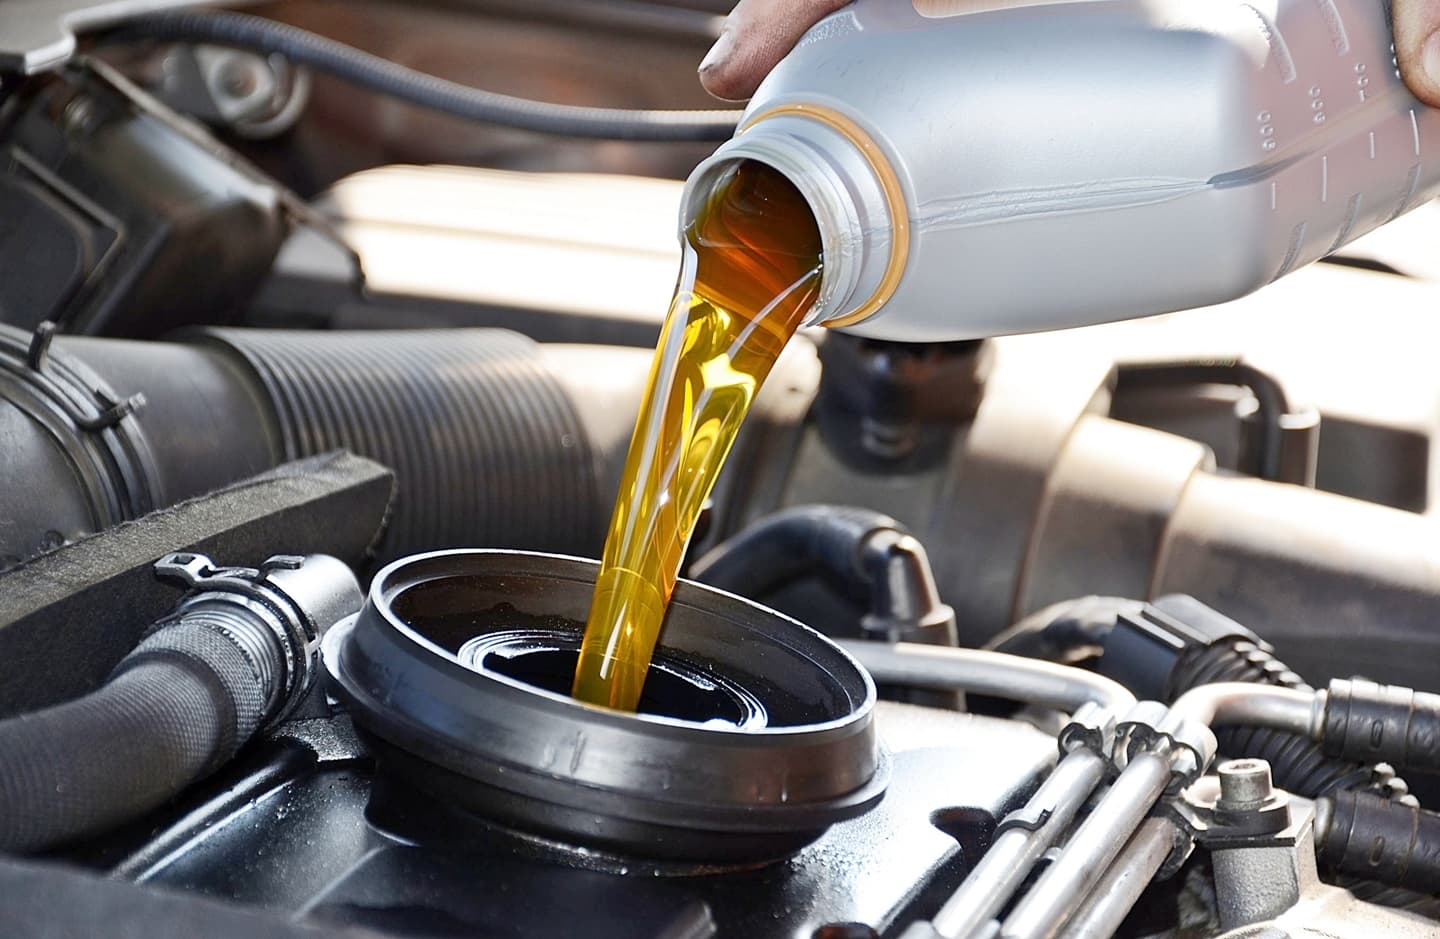 laringe Perímetro Perceptible Aceite para el coche barato vs aceite caro